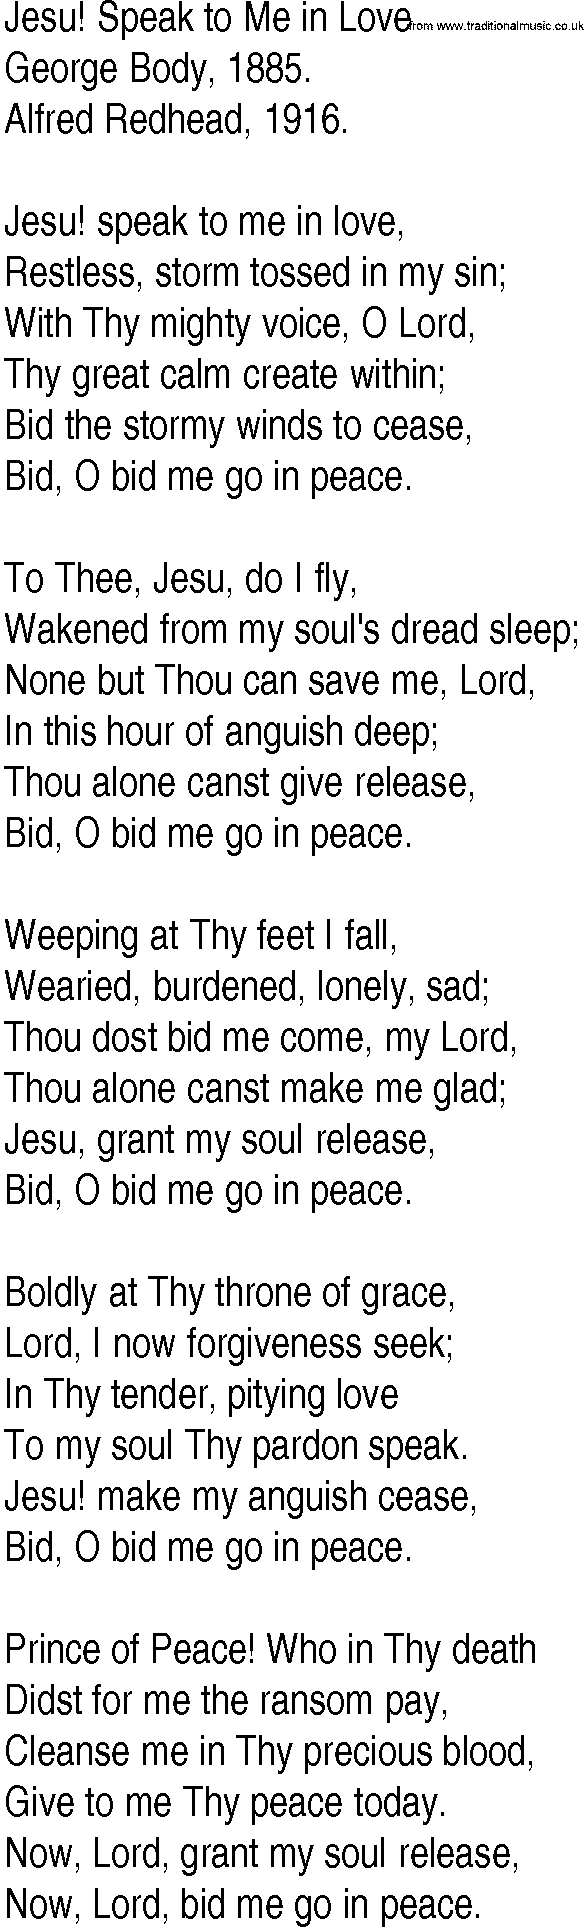 Hymn and Gospel Song: Jesu! Speak to Me in Love by George Body lyrics